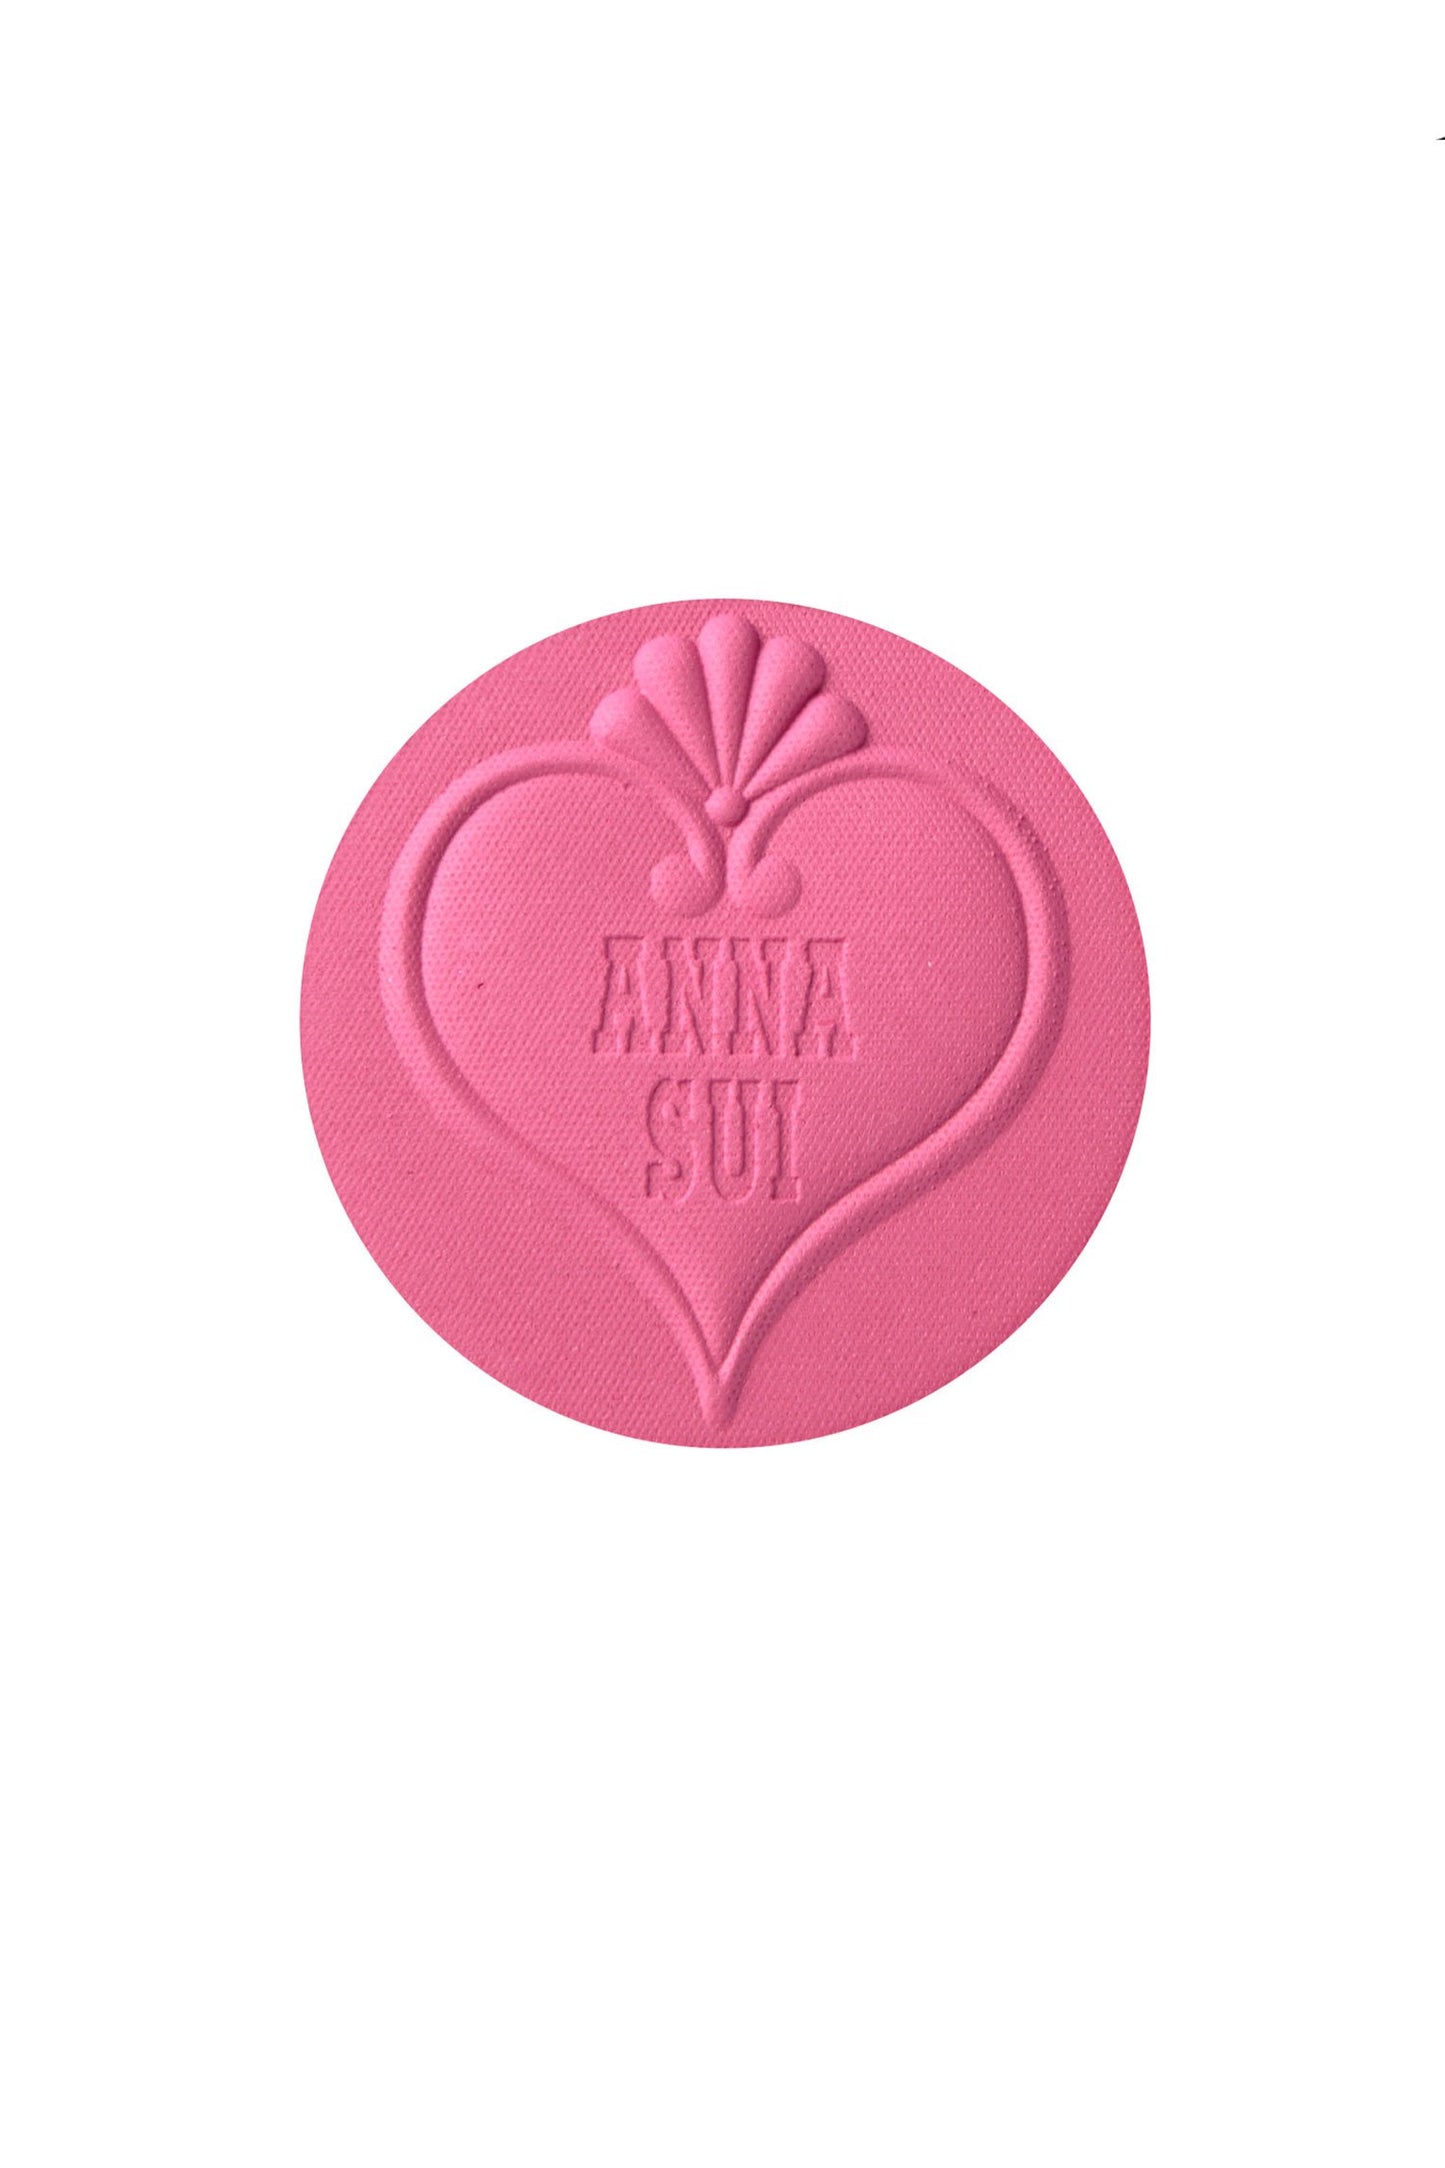 300 - Avant-Garde Pink Sui Black, round, engraved hart, seashell on top, Anna Sui branding inside